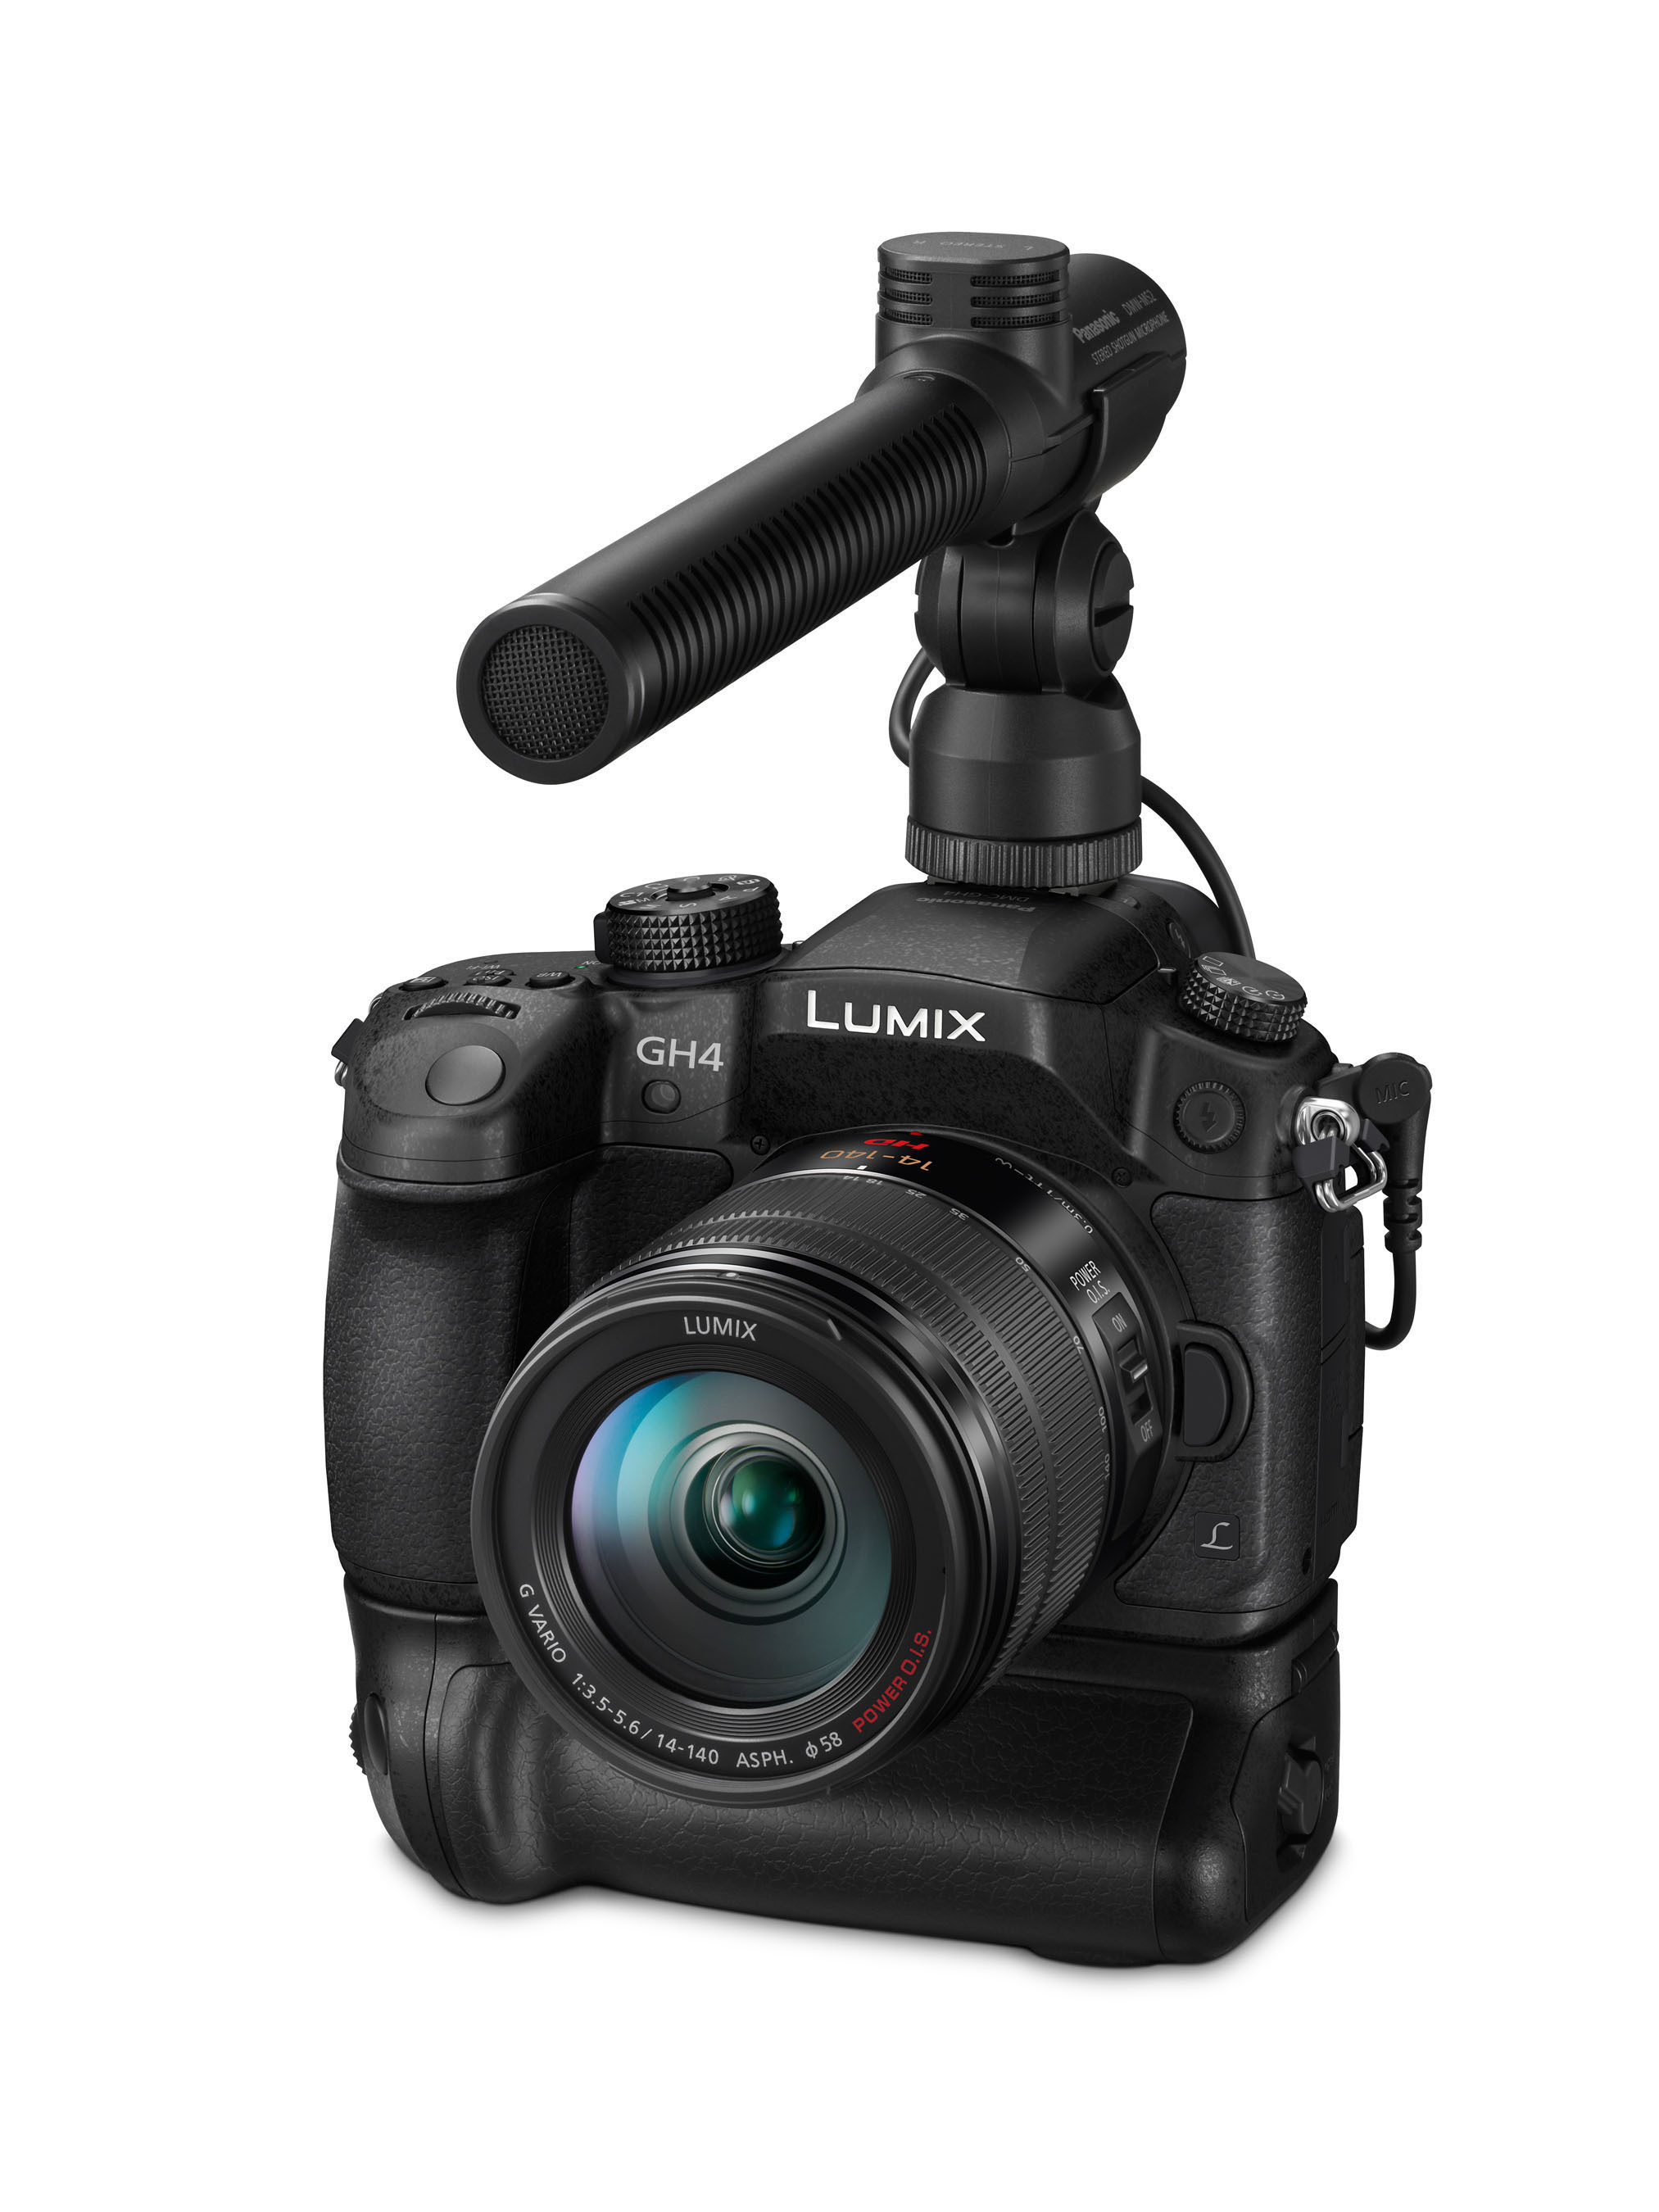 The Panasonic LUMIX GH4 DSLM Digital Single Lens Mirrorless